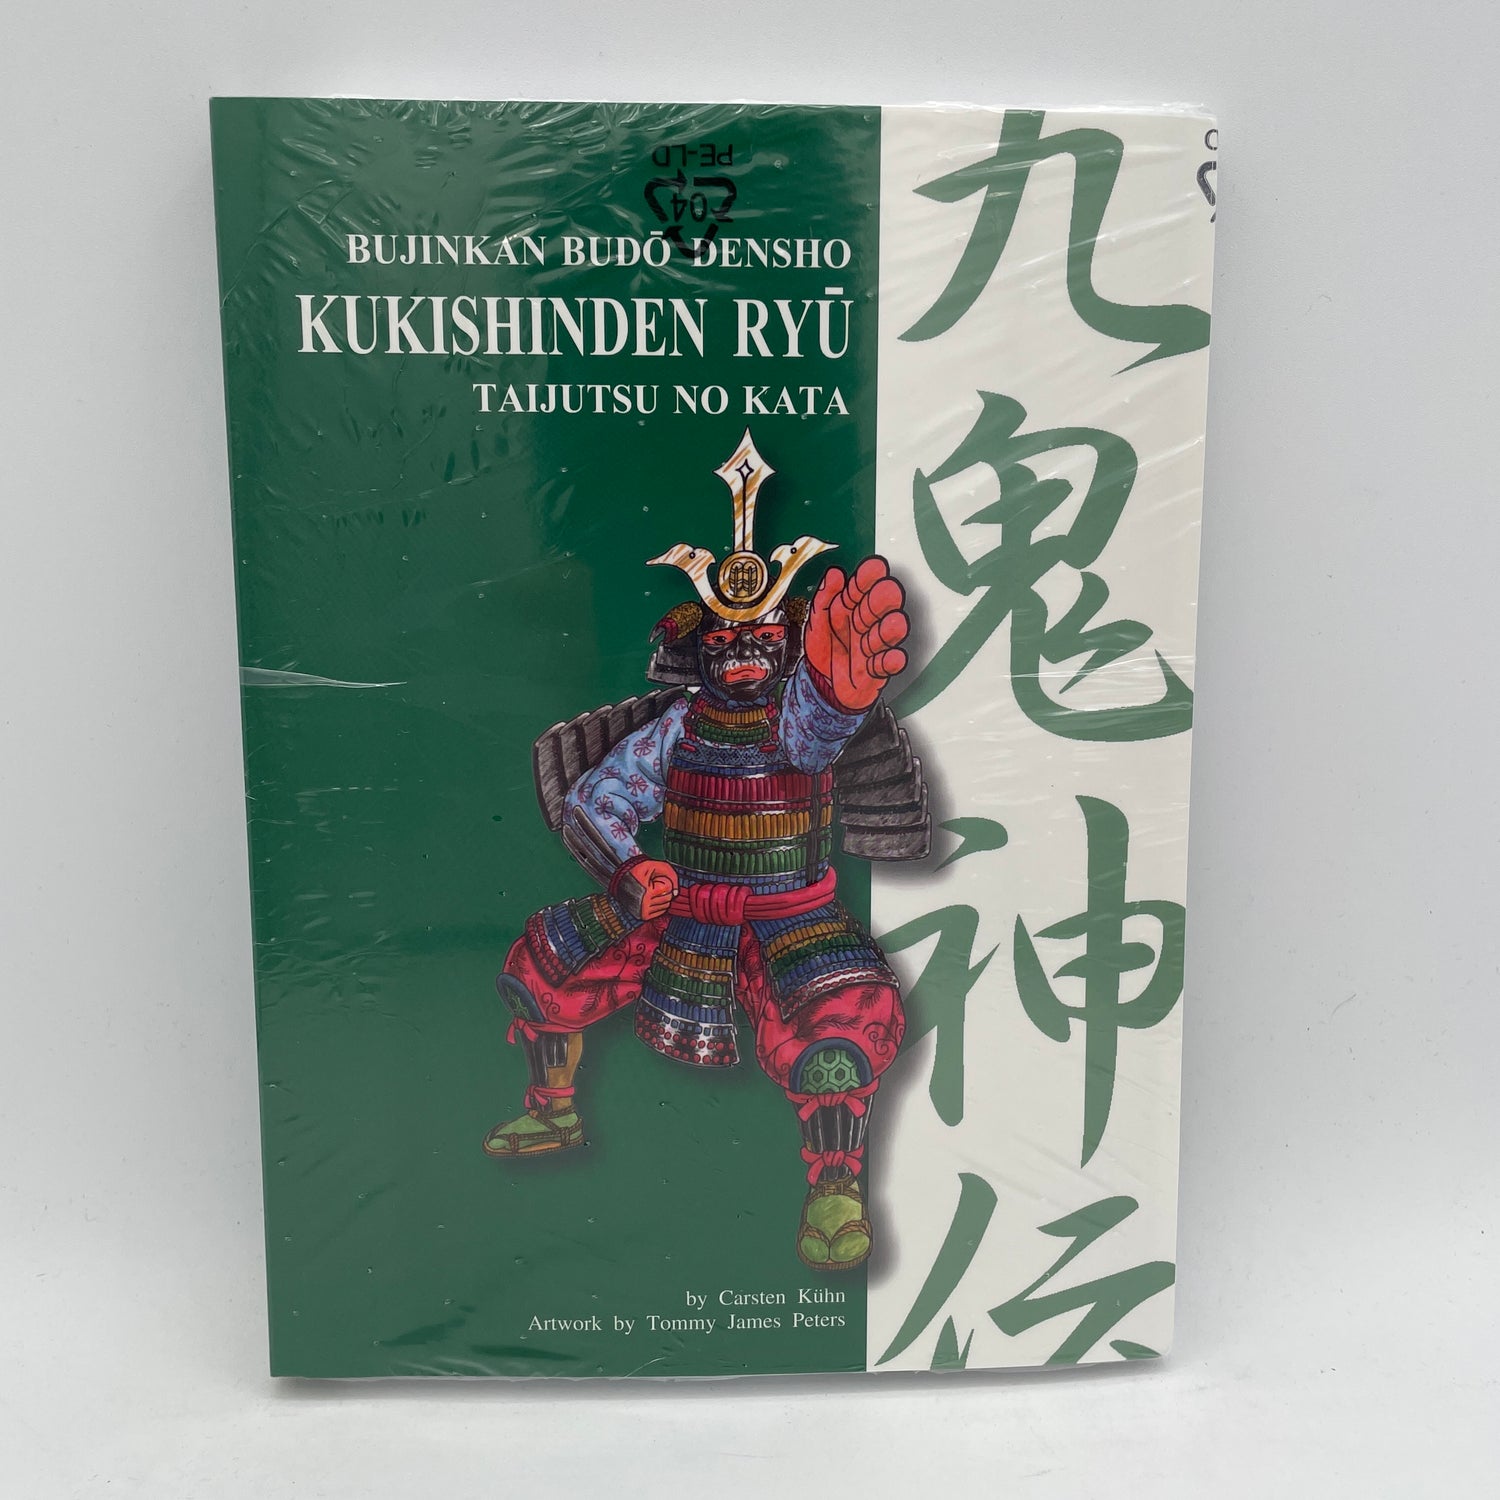 Bujinkan Budo Densho Libro 2 Kukishinden Ryu de Carsten Kuhn